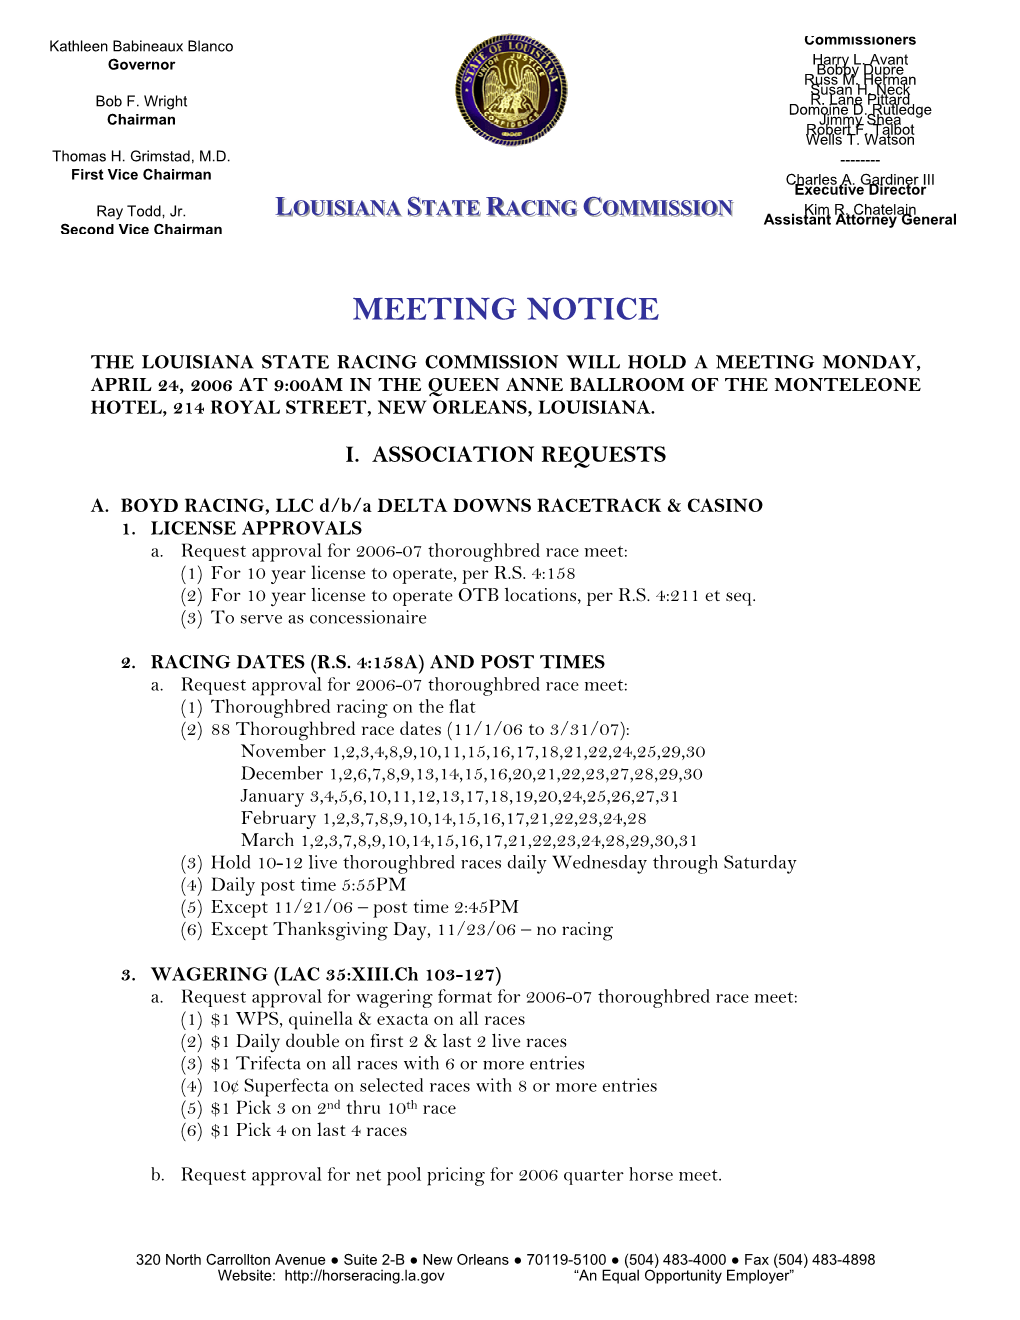 Meeting Notice 04-24-2006